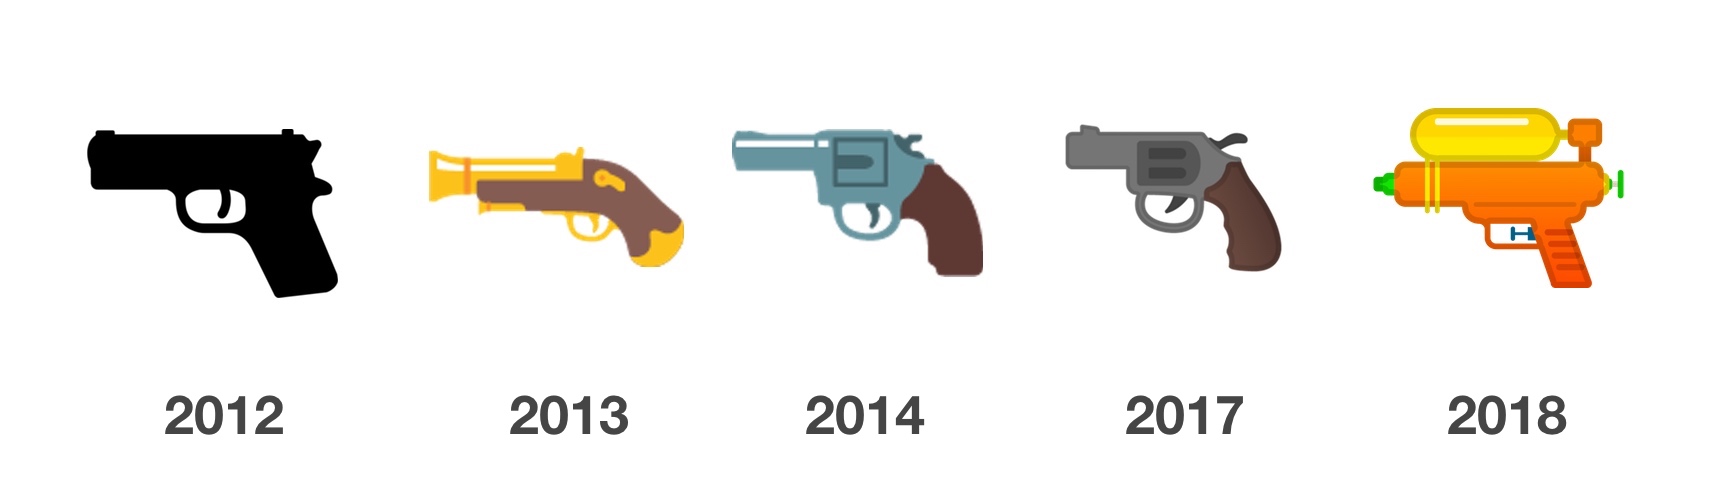 google-pistol-emojis-emojipedia-2012-2018